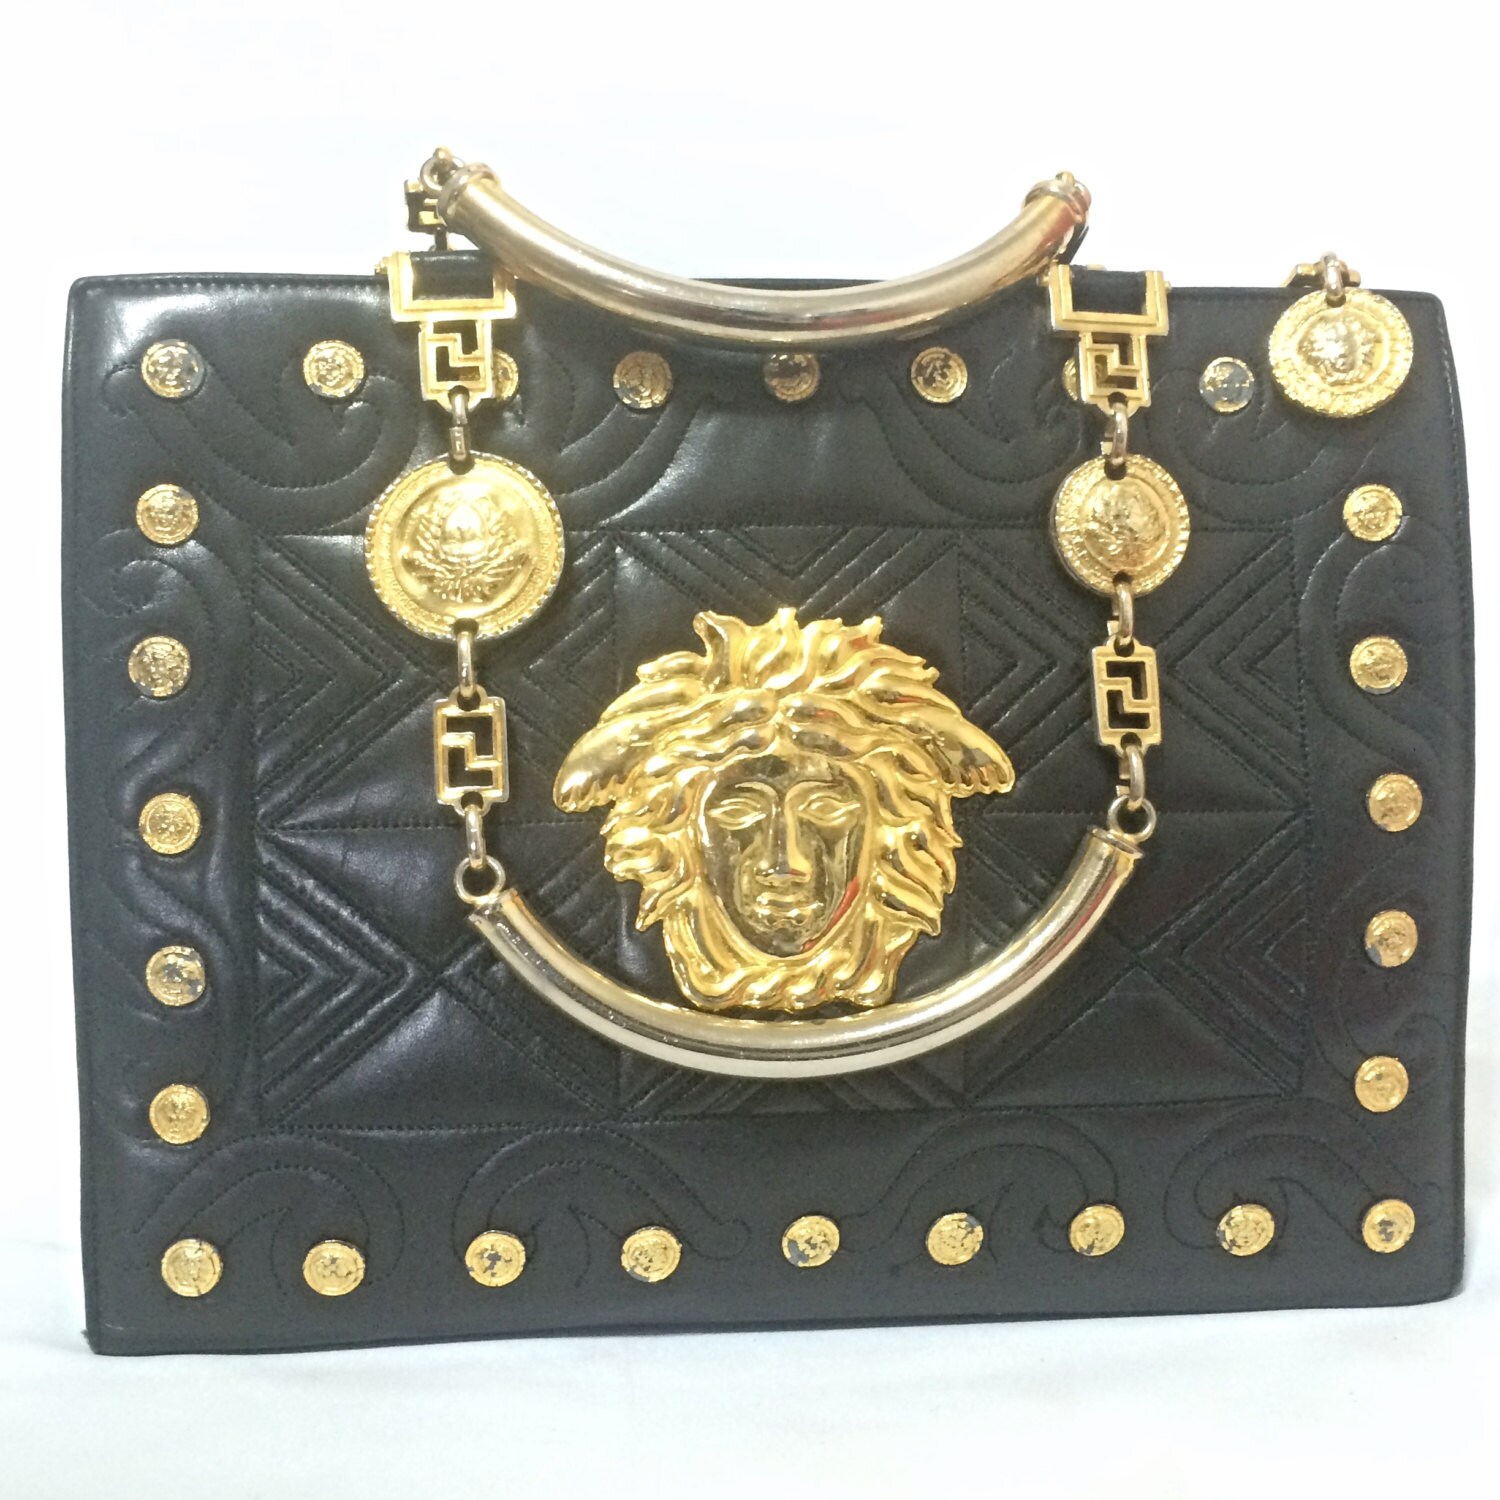 Vintage Gianni Versace black leather tote bag with big golden